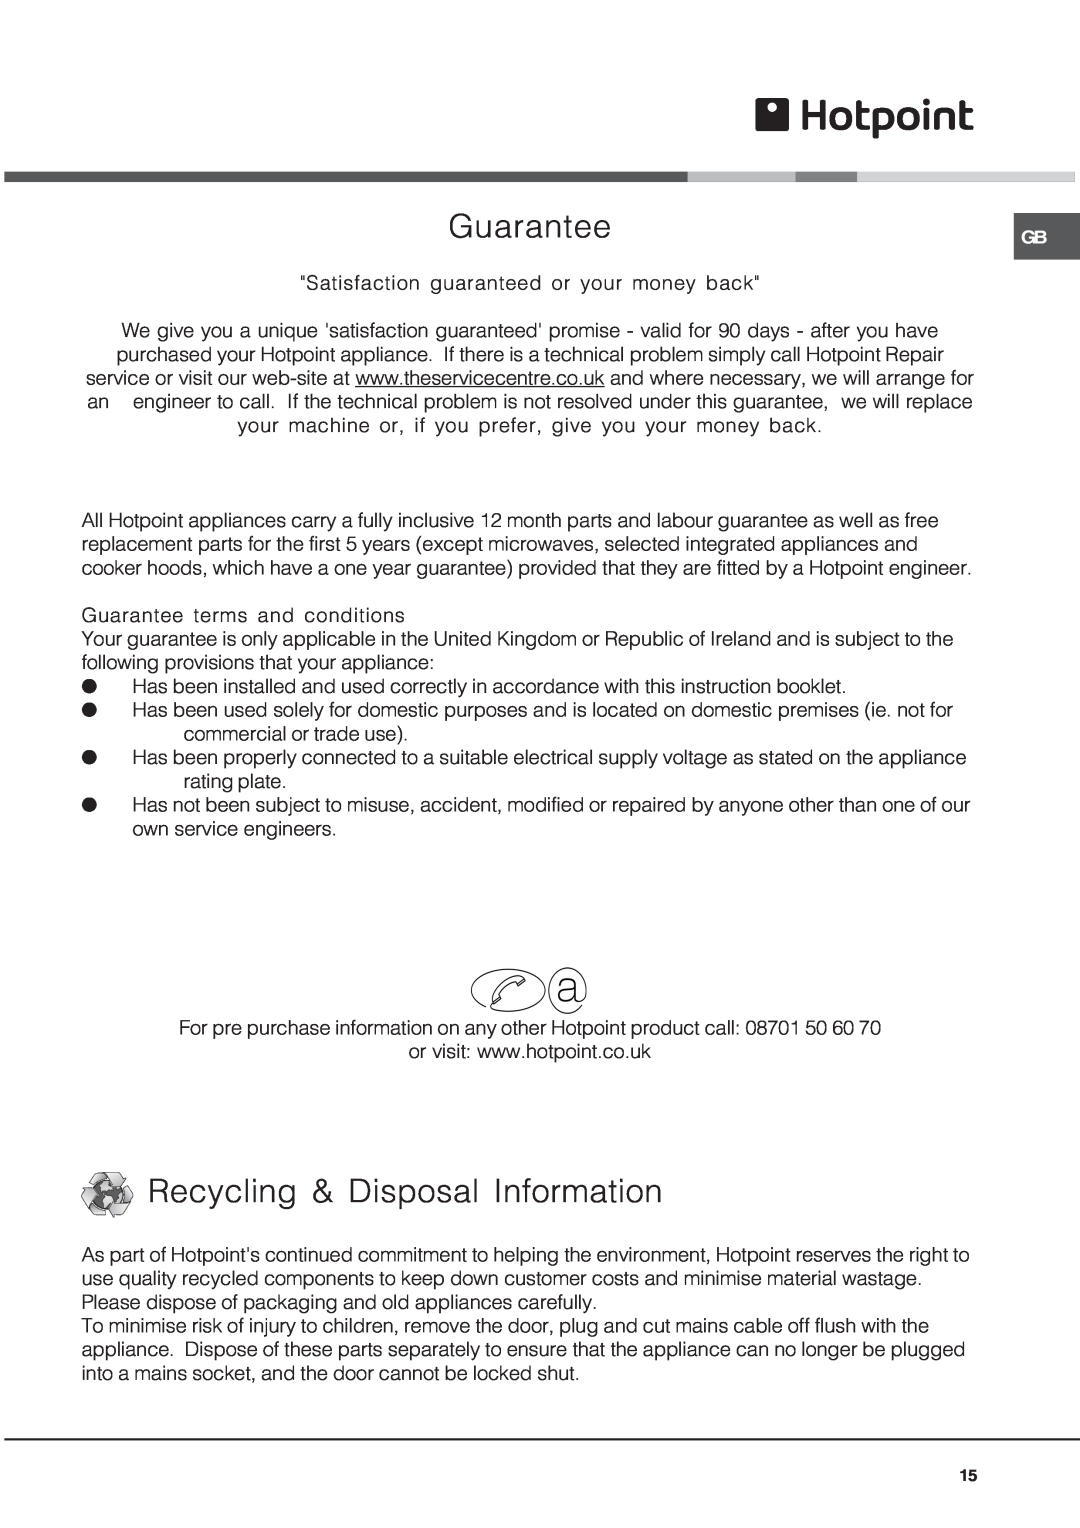 Hotpoint CIC 642 C manual Guarantee, Recycling & Disposal Information 